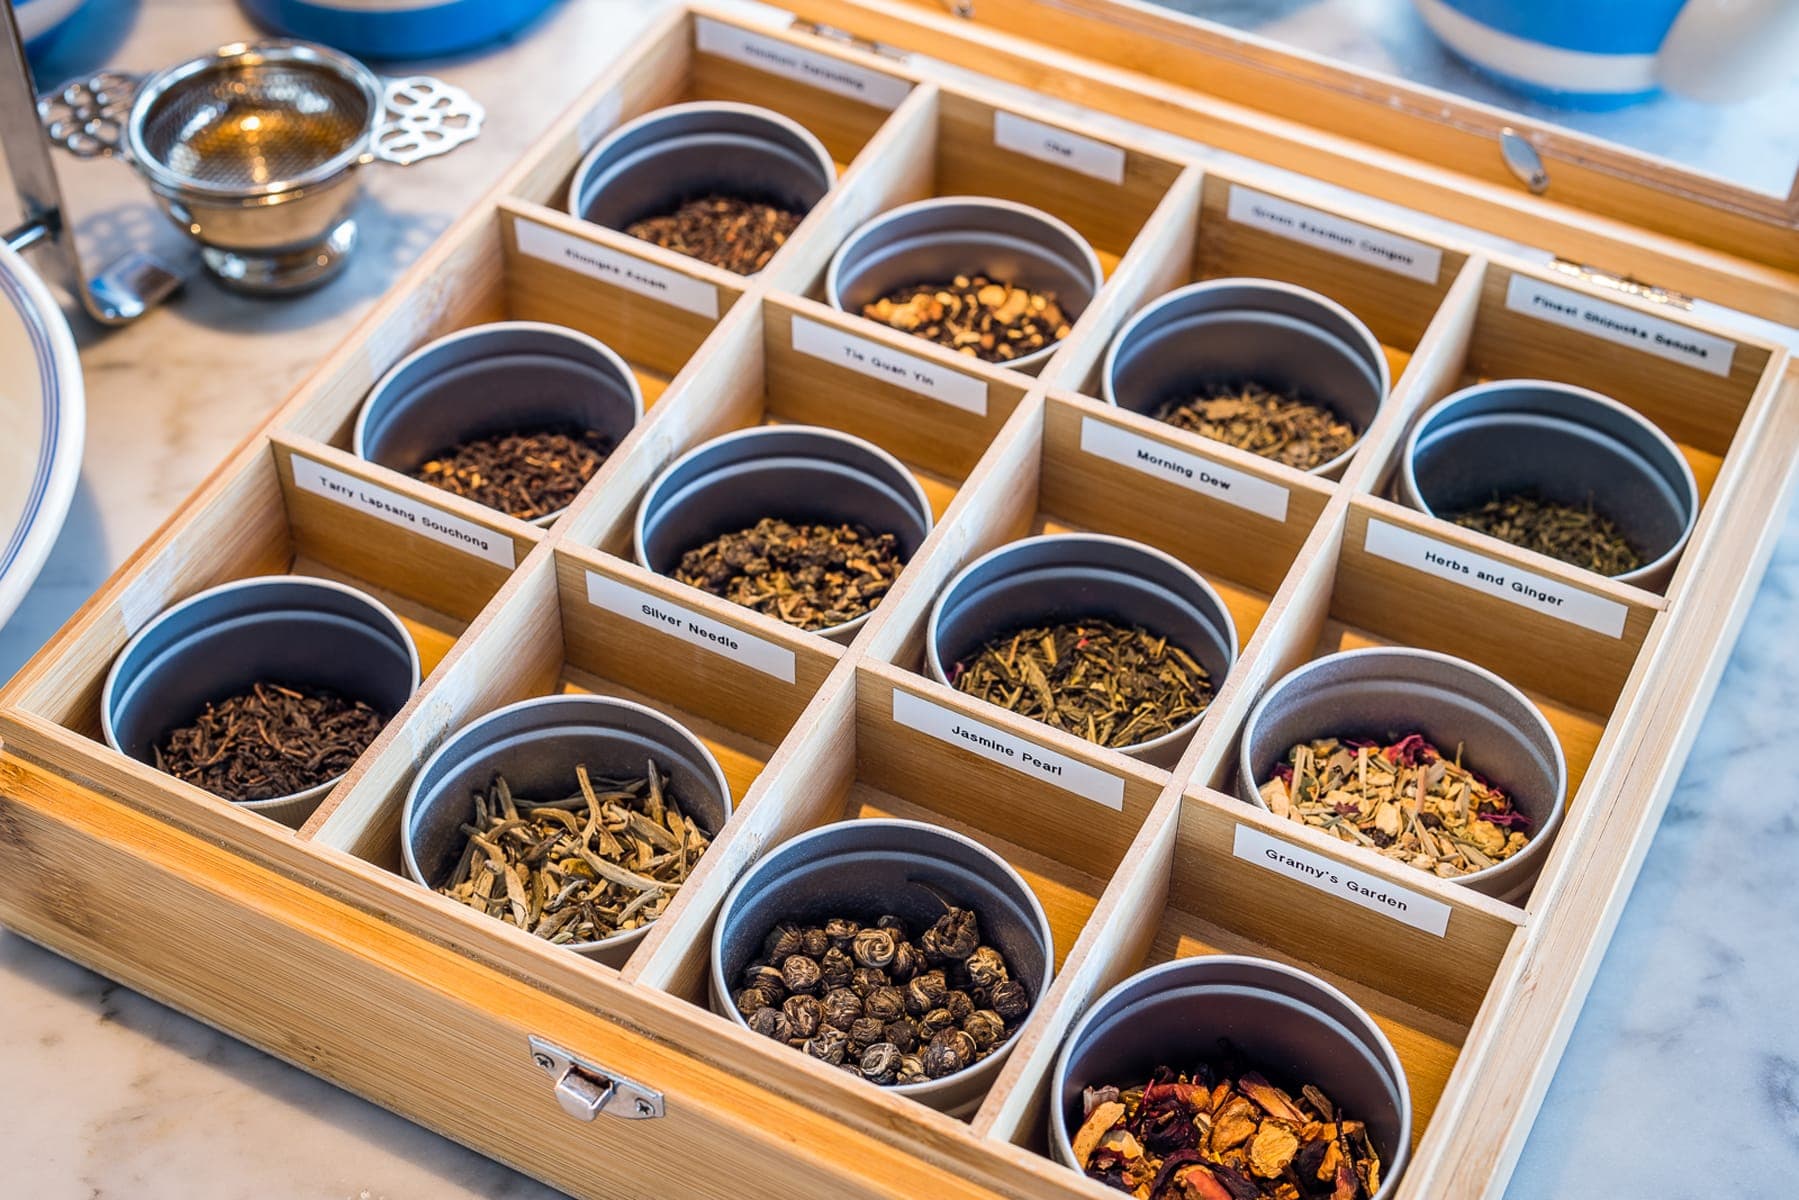 Tea selection at Six Cambridge